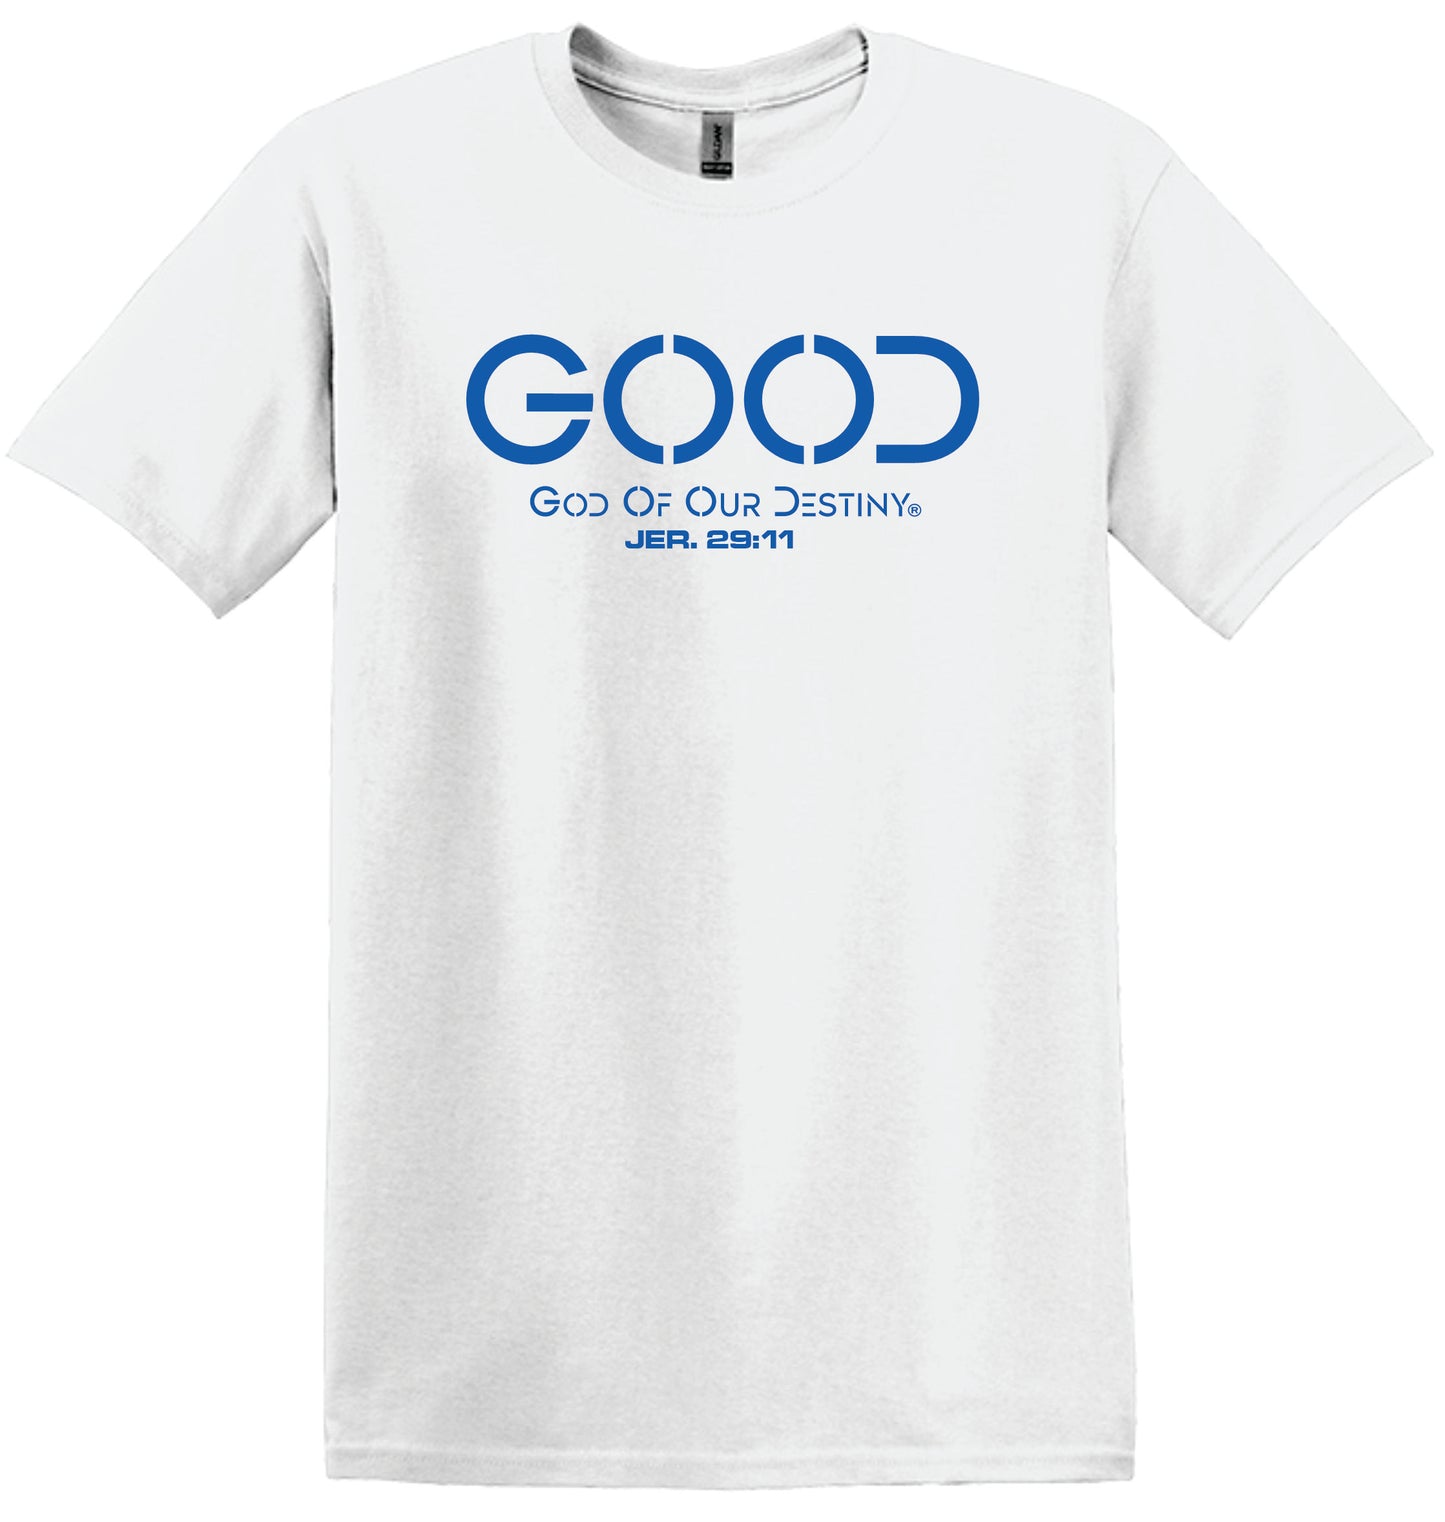 G.O.O.D.® N.E.W.S.® God of our destiny® & Now Eternity With Savior® T- Shirts Support Ukraine! - COATES Christian Apparel